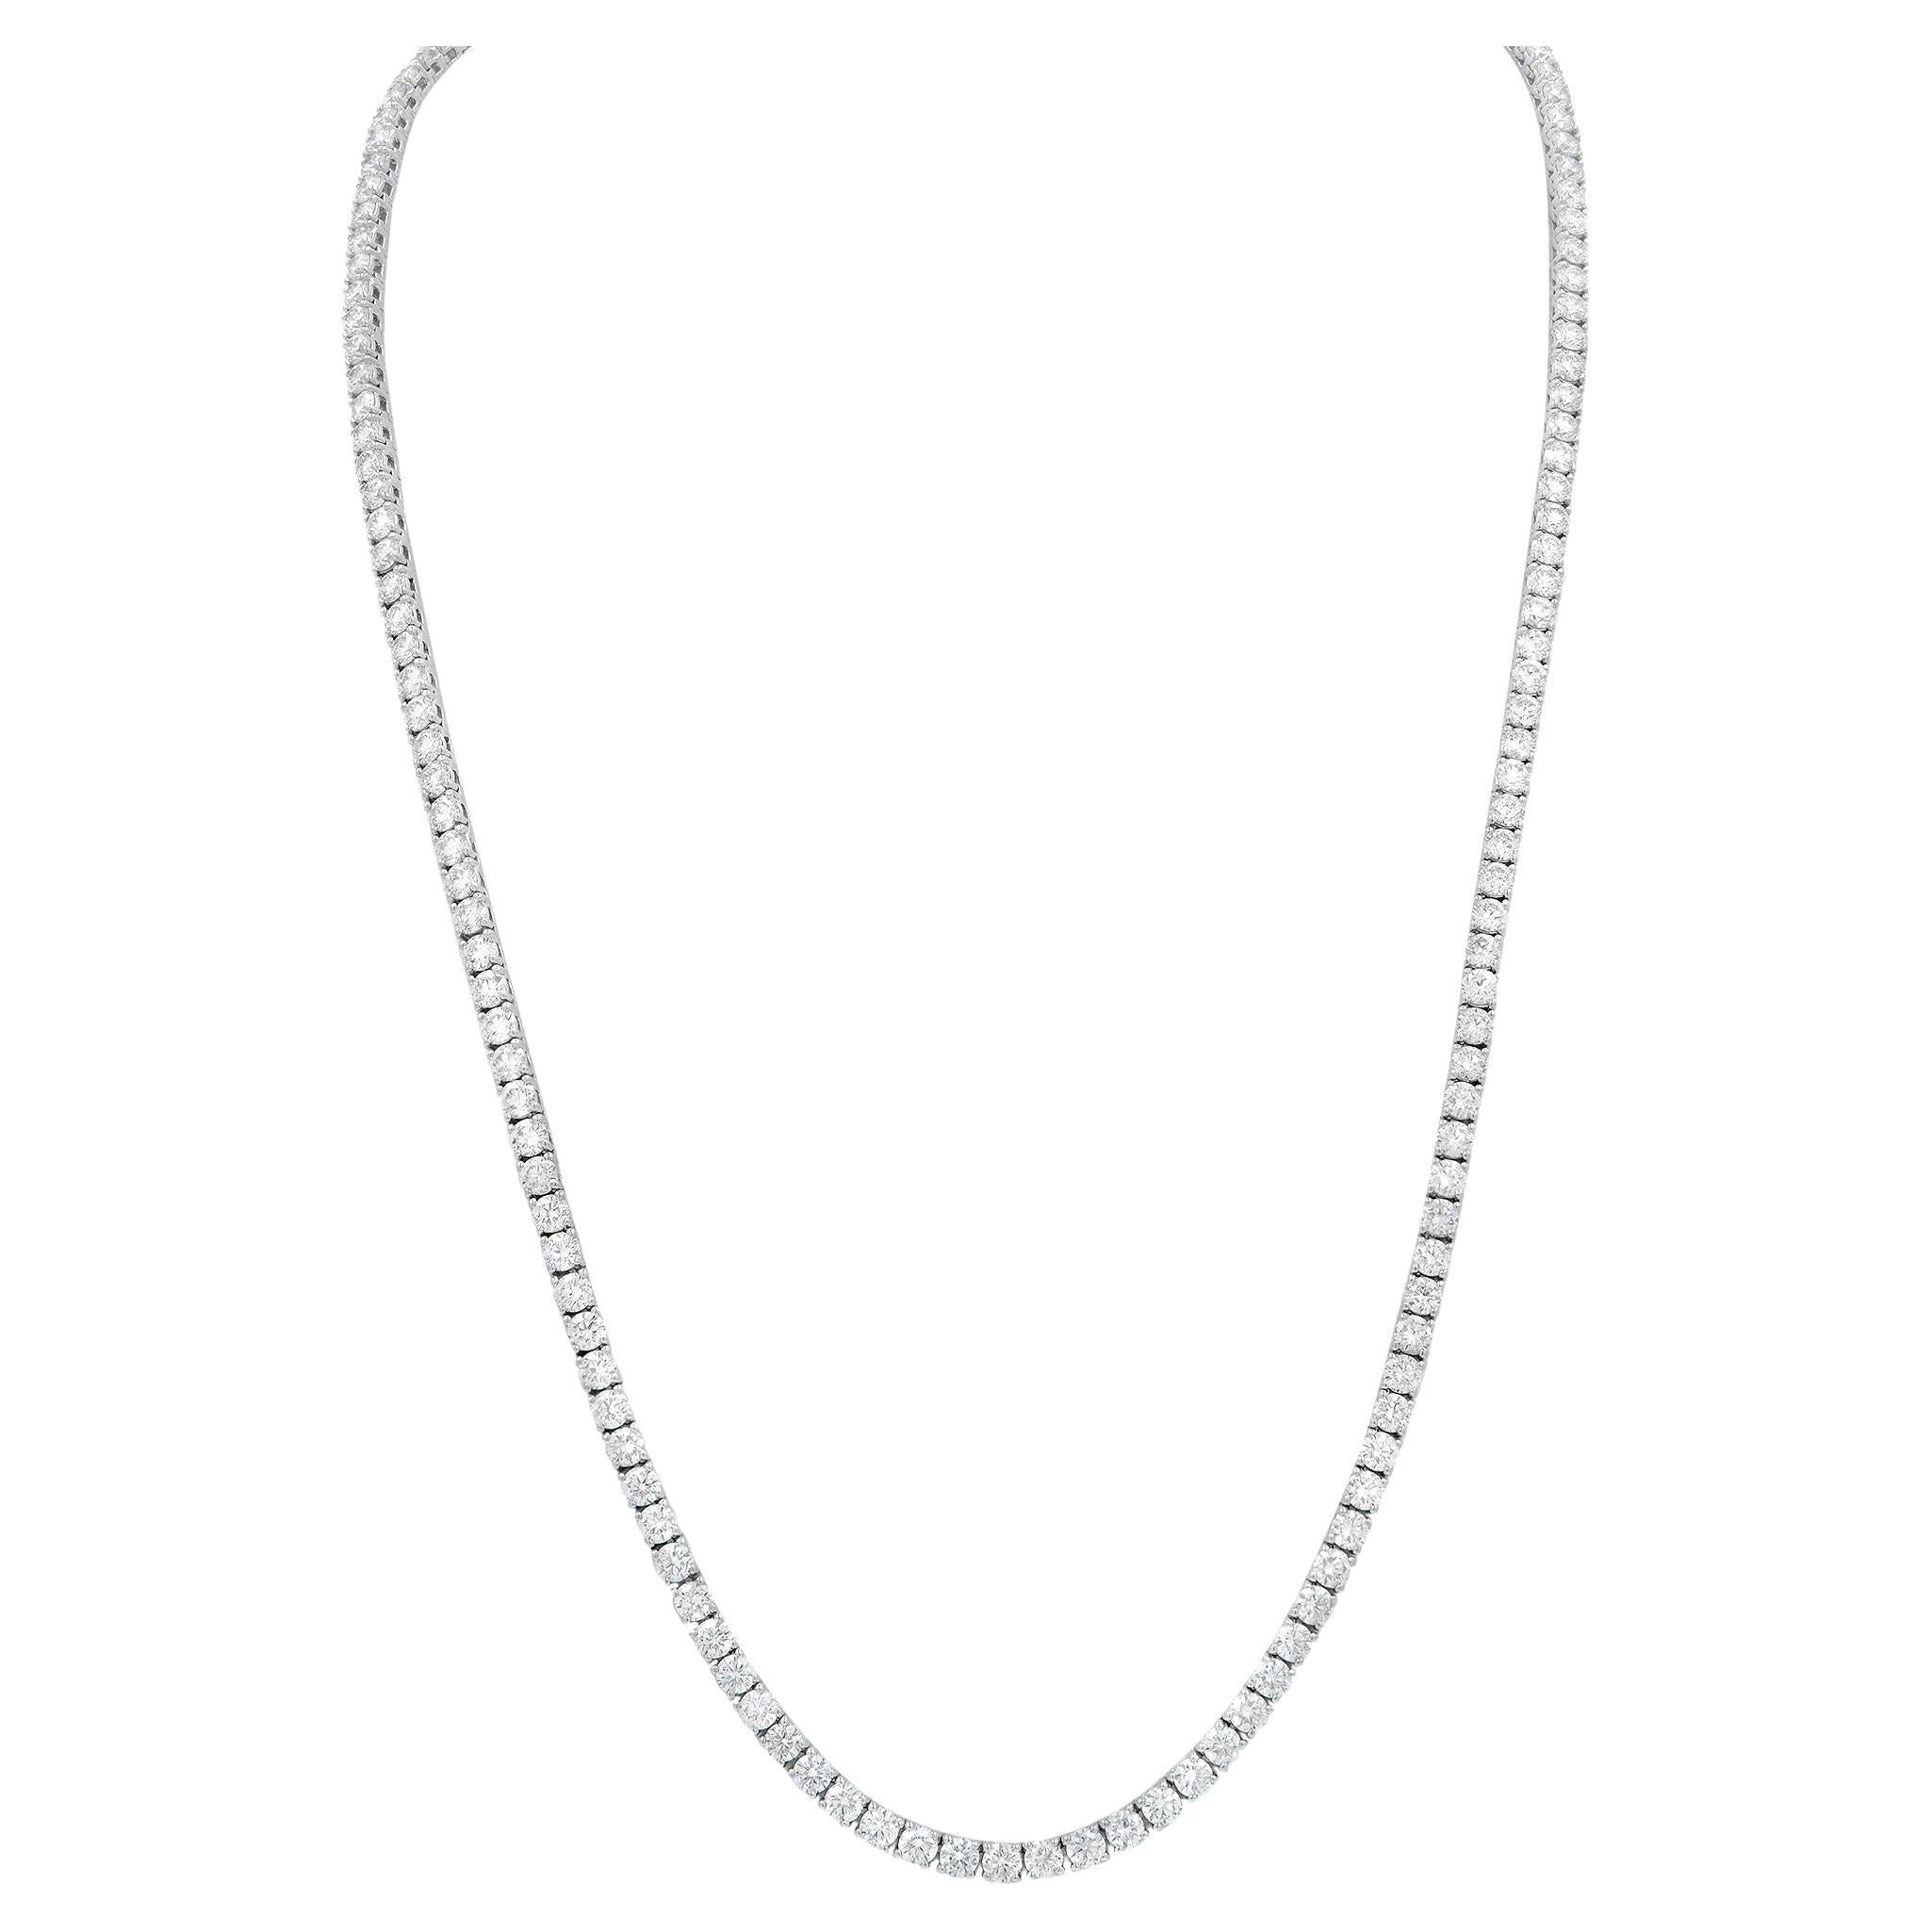 Rachel Koen Round Cut Diamond Tennis Necklace 14K White Gold 13.63Cttw 18 Inches For Sale